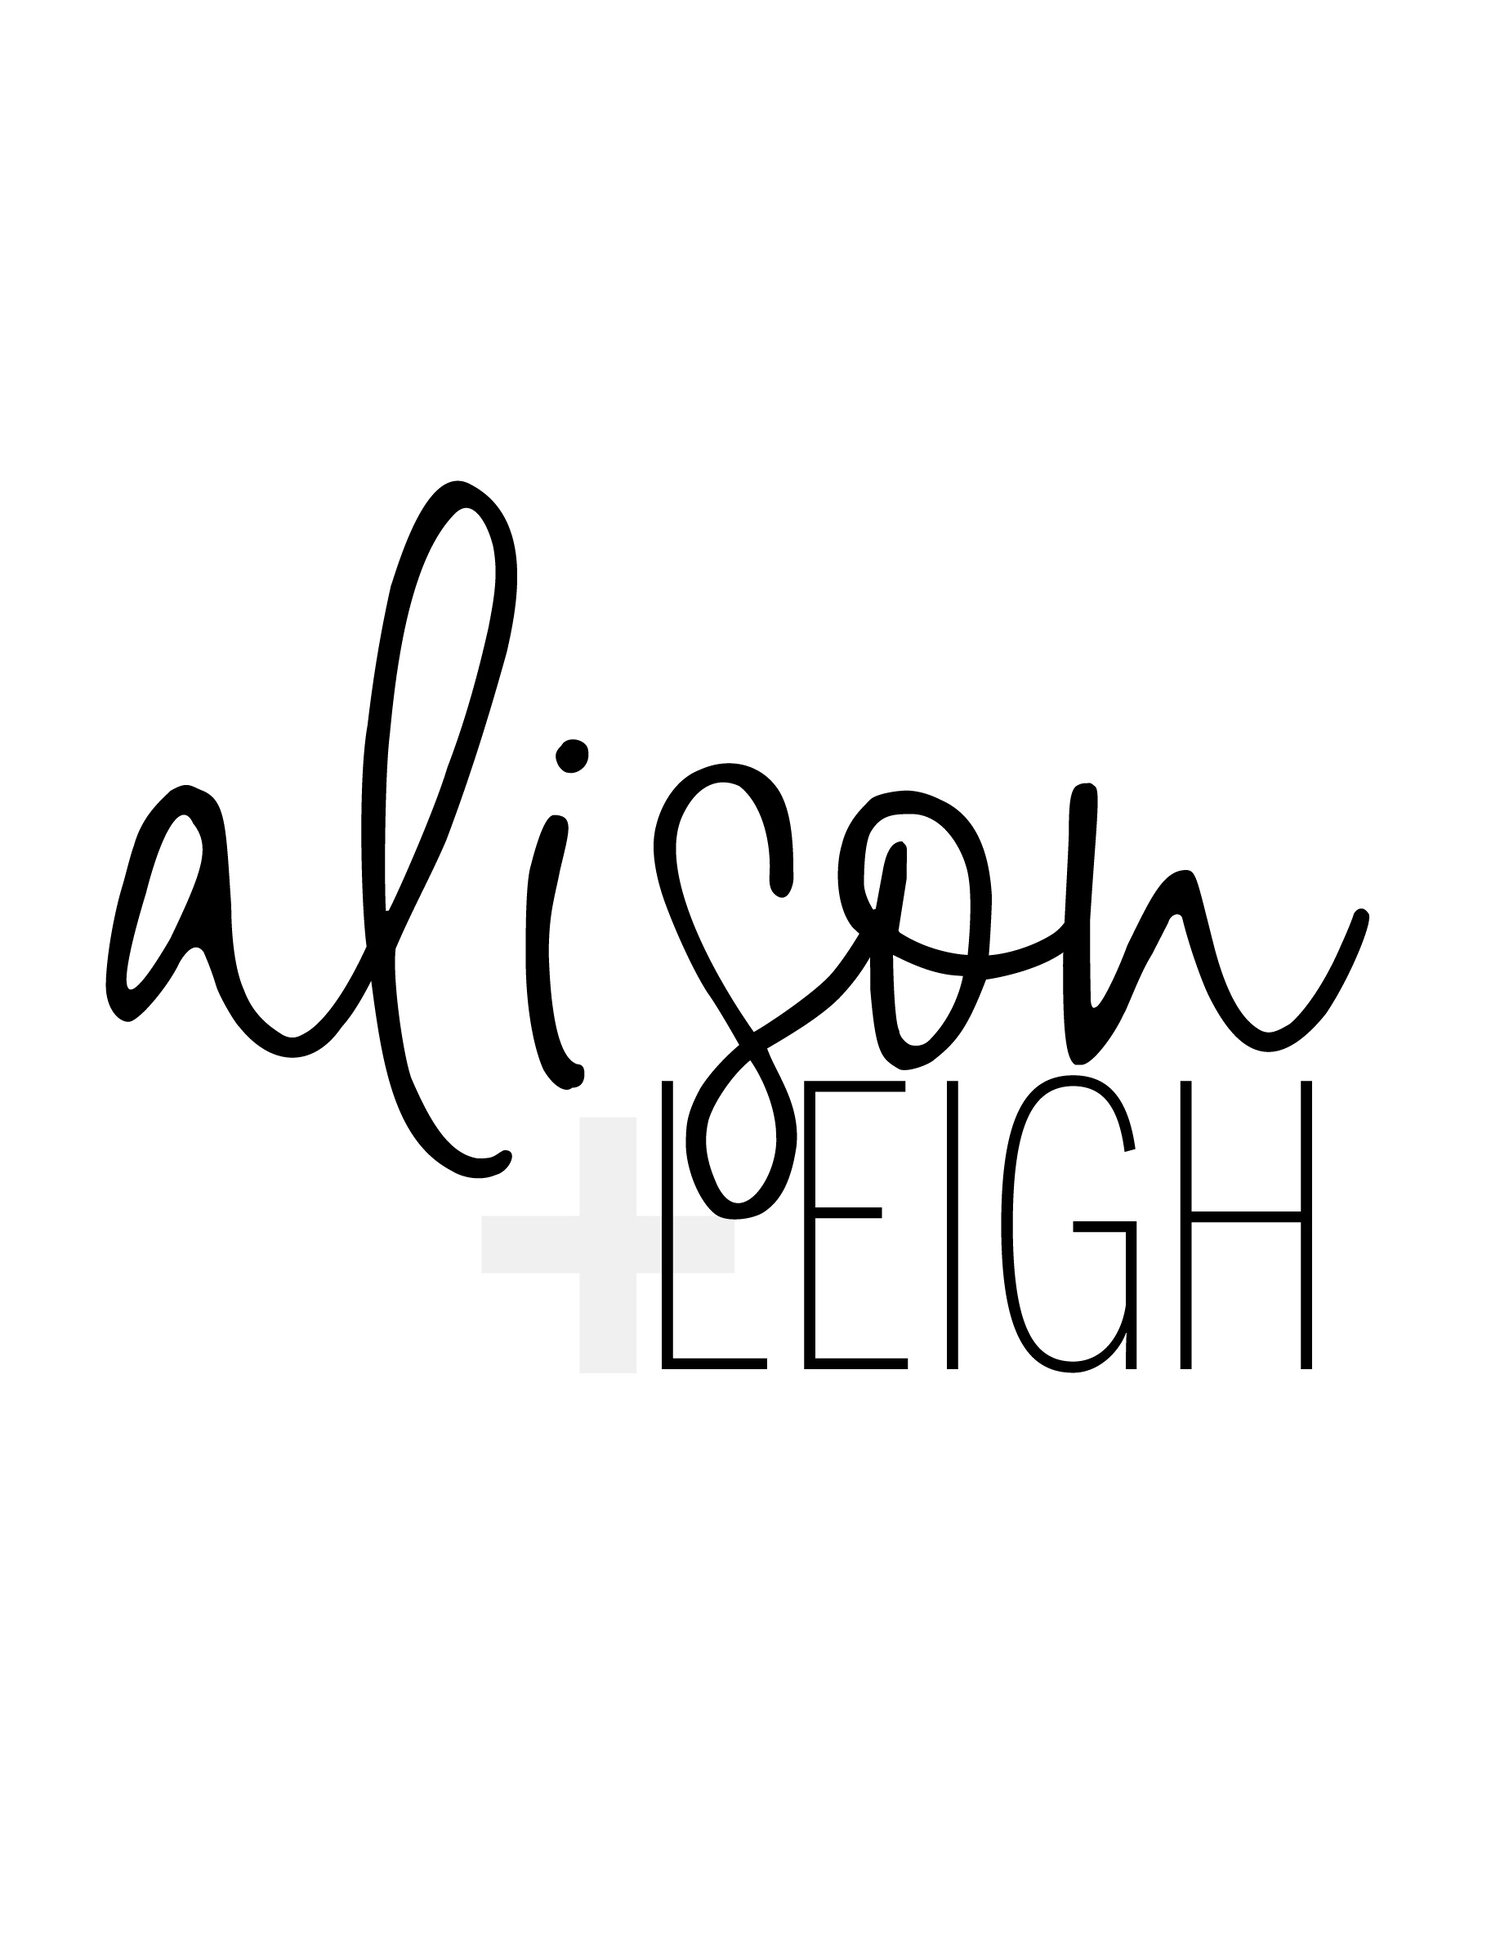 Alison Leigh